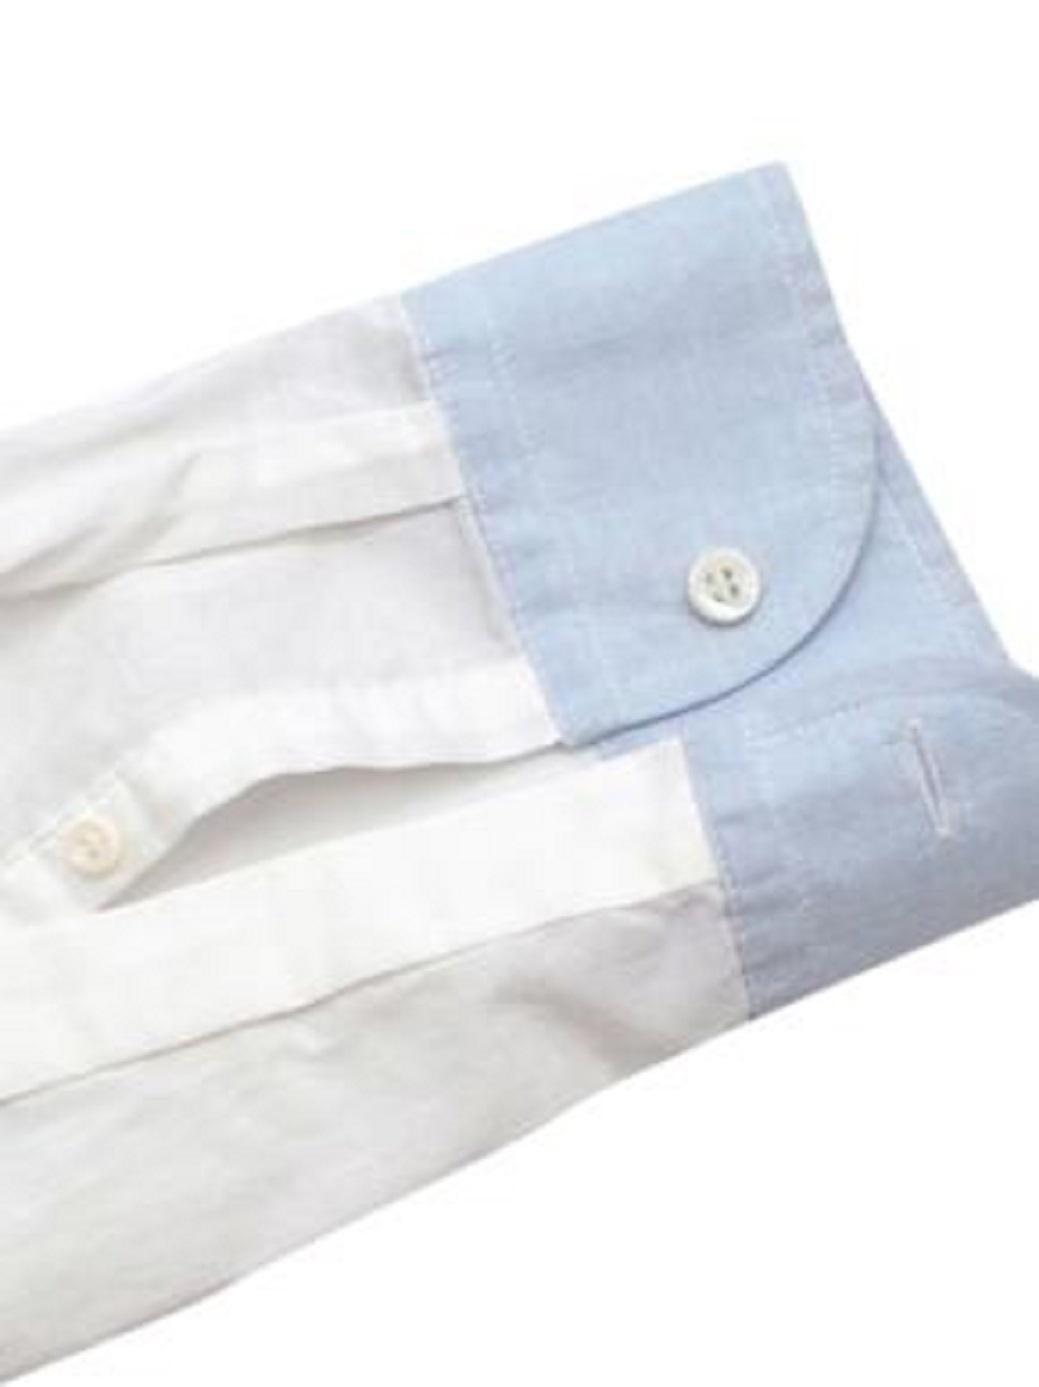 Maison Martin Margiela Cotton Voile White Long Sleeve Shirt For Sale 1